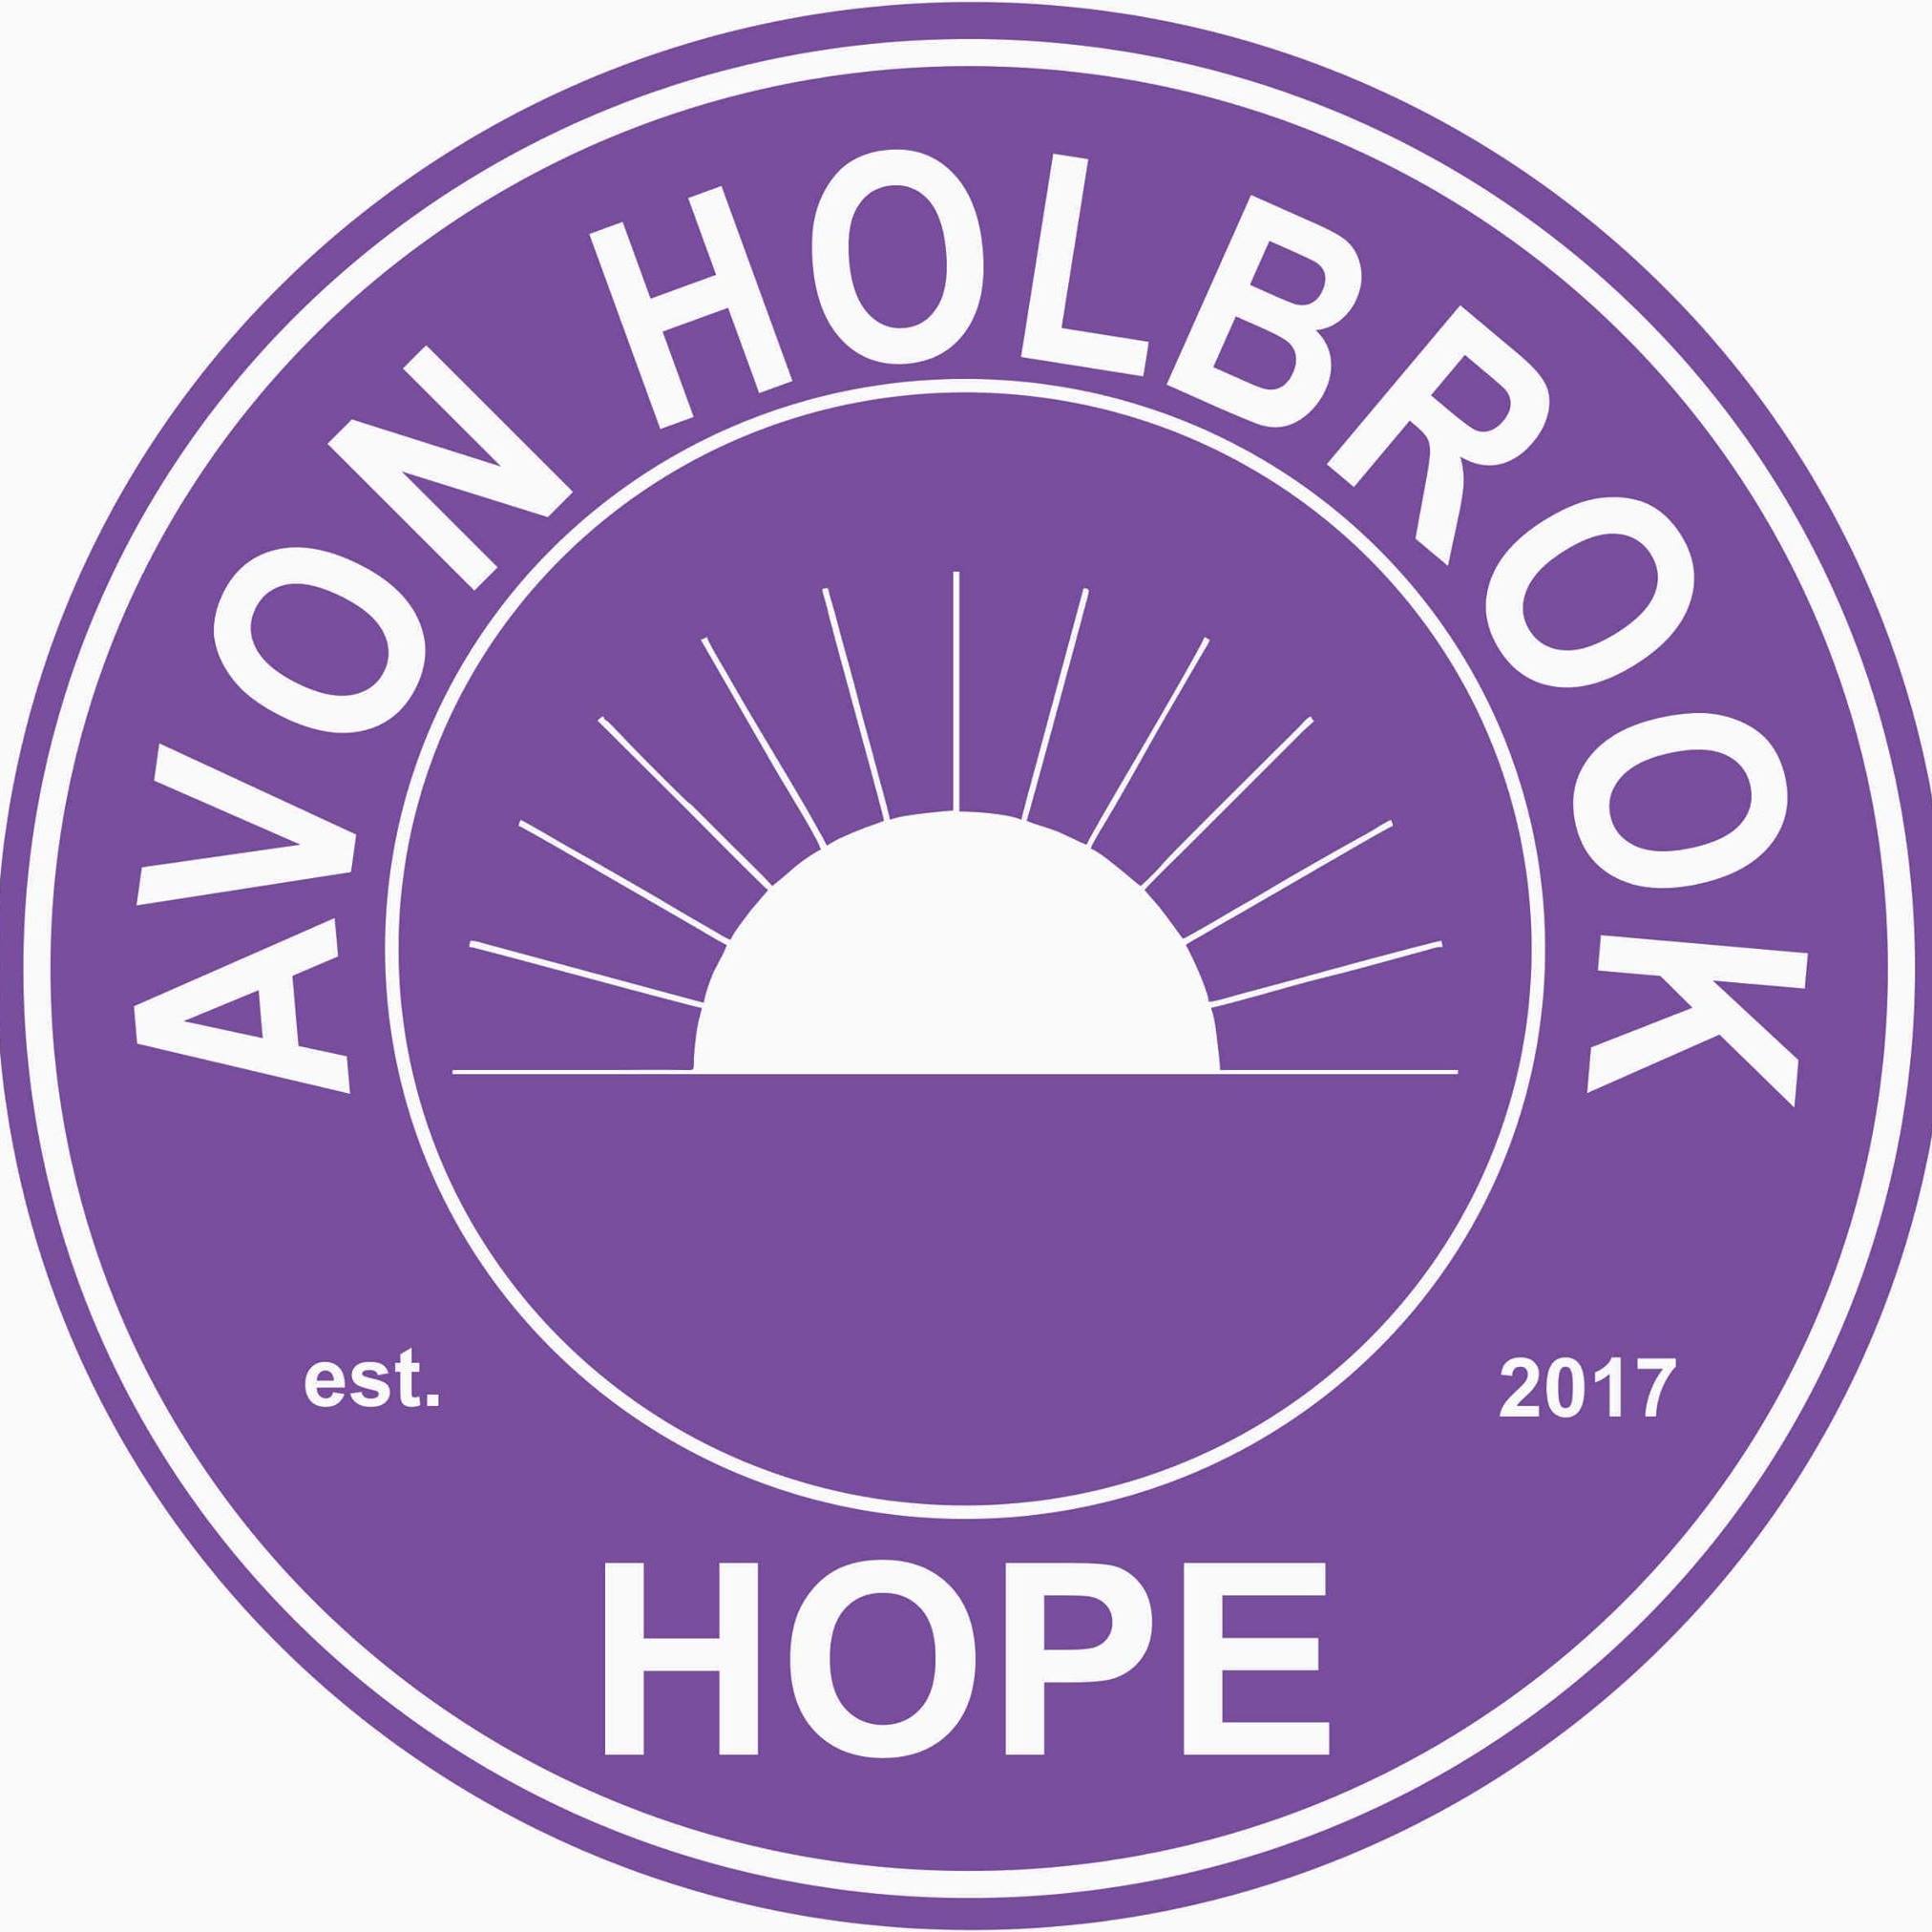 Avon Holbrook Hope Logo 